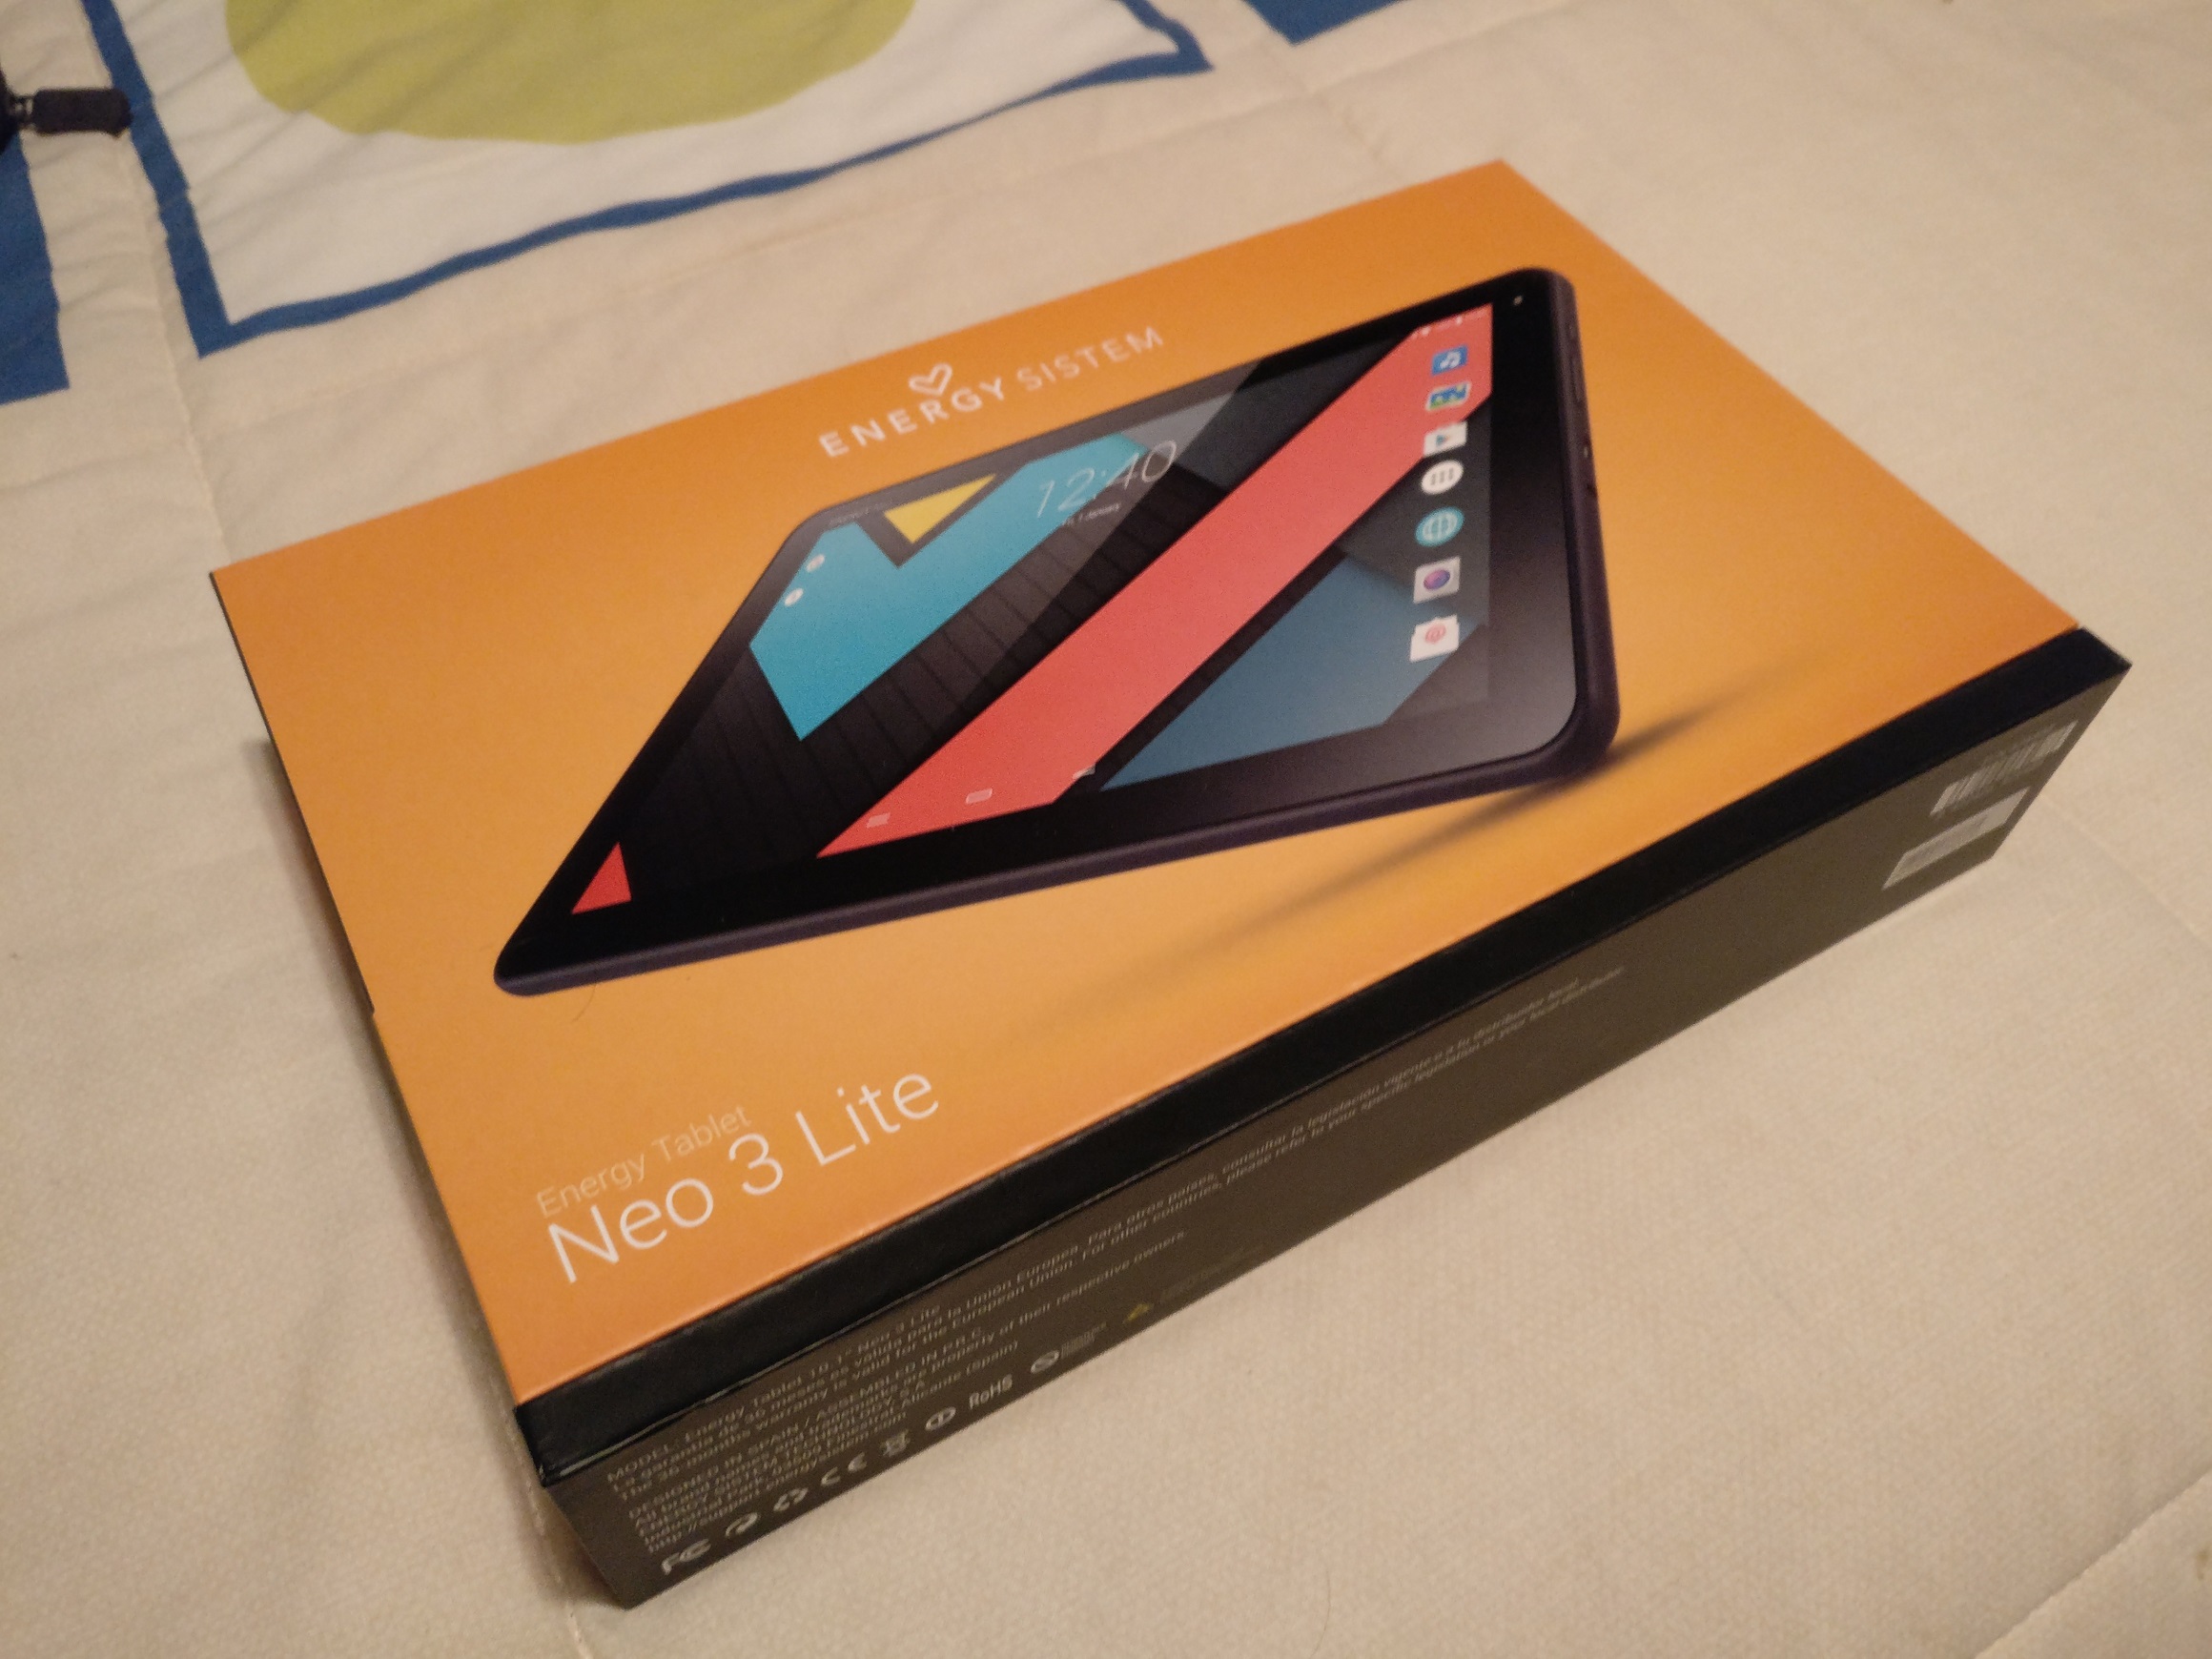 Energy Tablet Neo 3 Lite